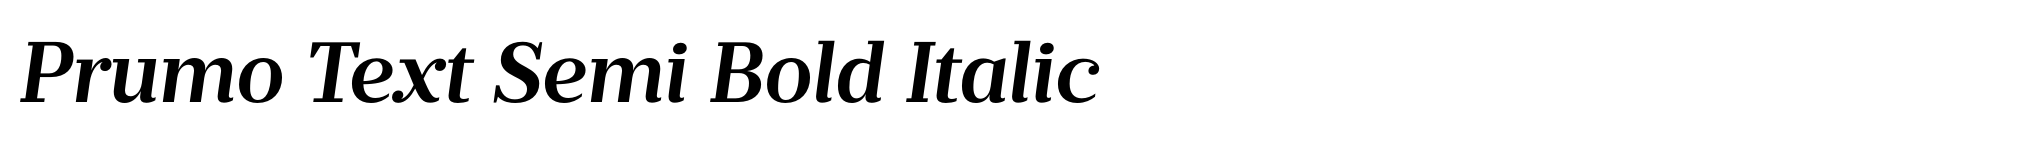 Prumo Text Semi Bold Italic image